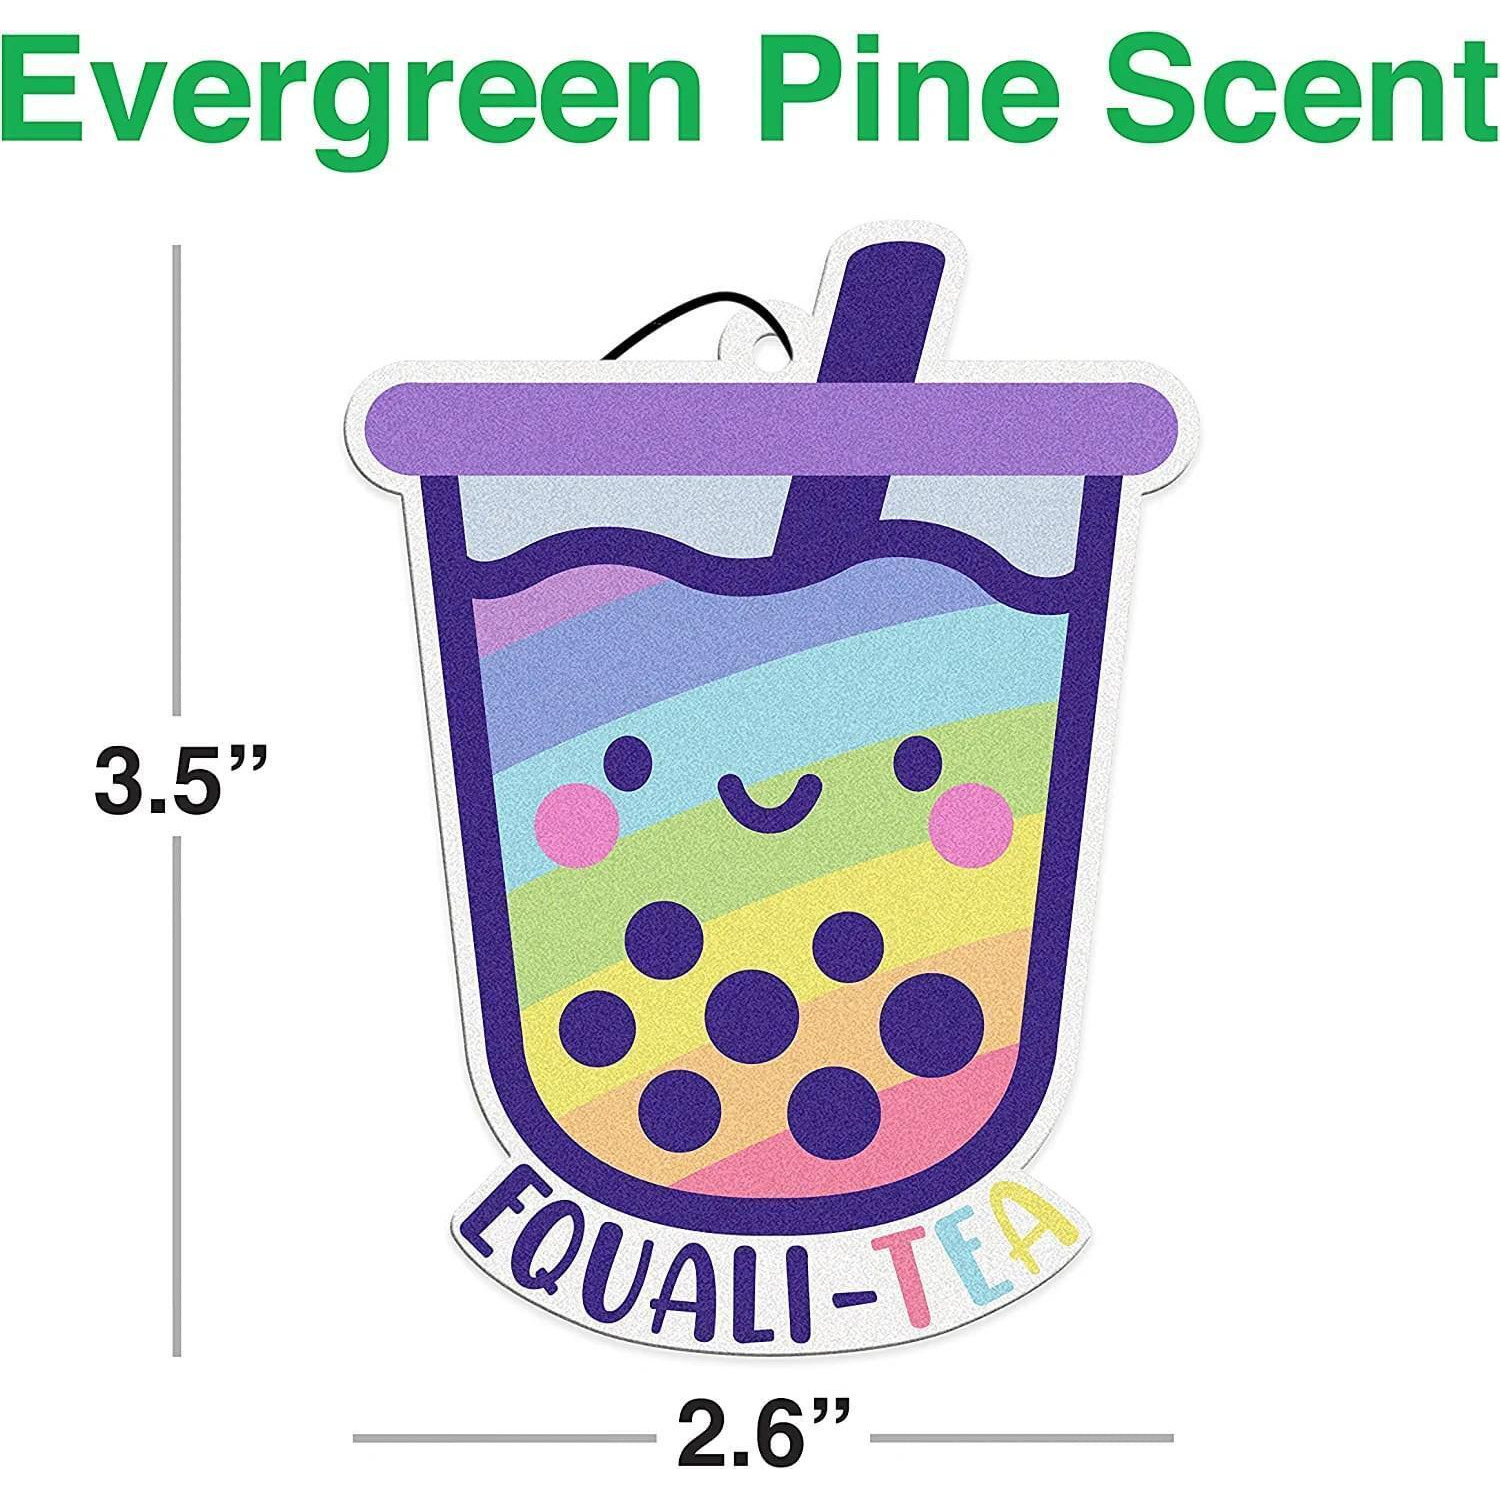 Equali-tea GAMAGO Air Freshener | Evergreen Pine Scent alternate image